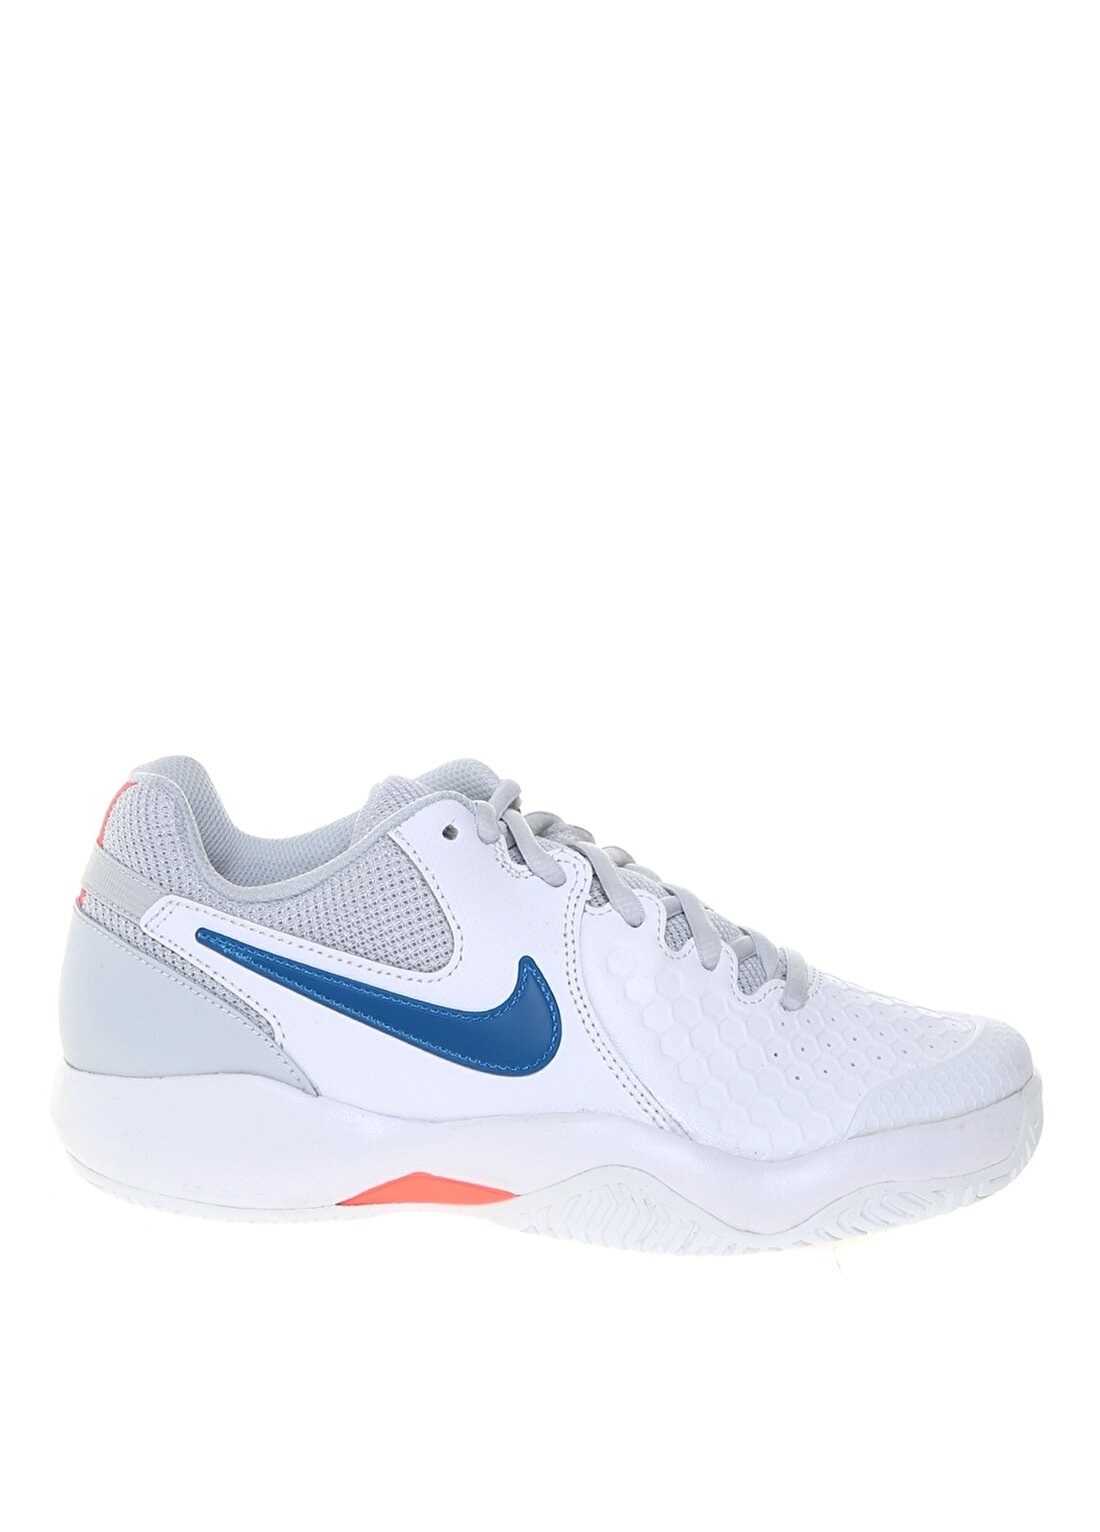 Nike Air Zoom Resista Tenis Ayakkabısı